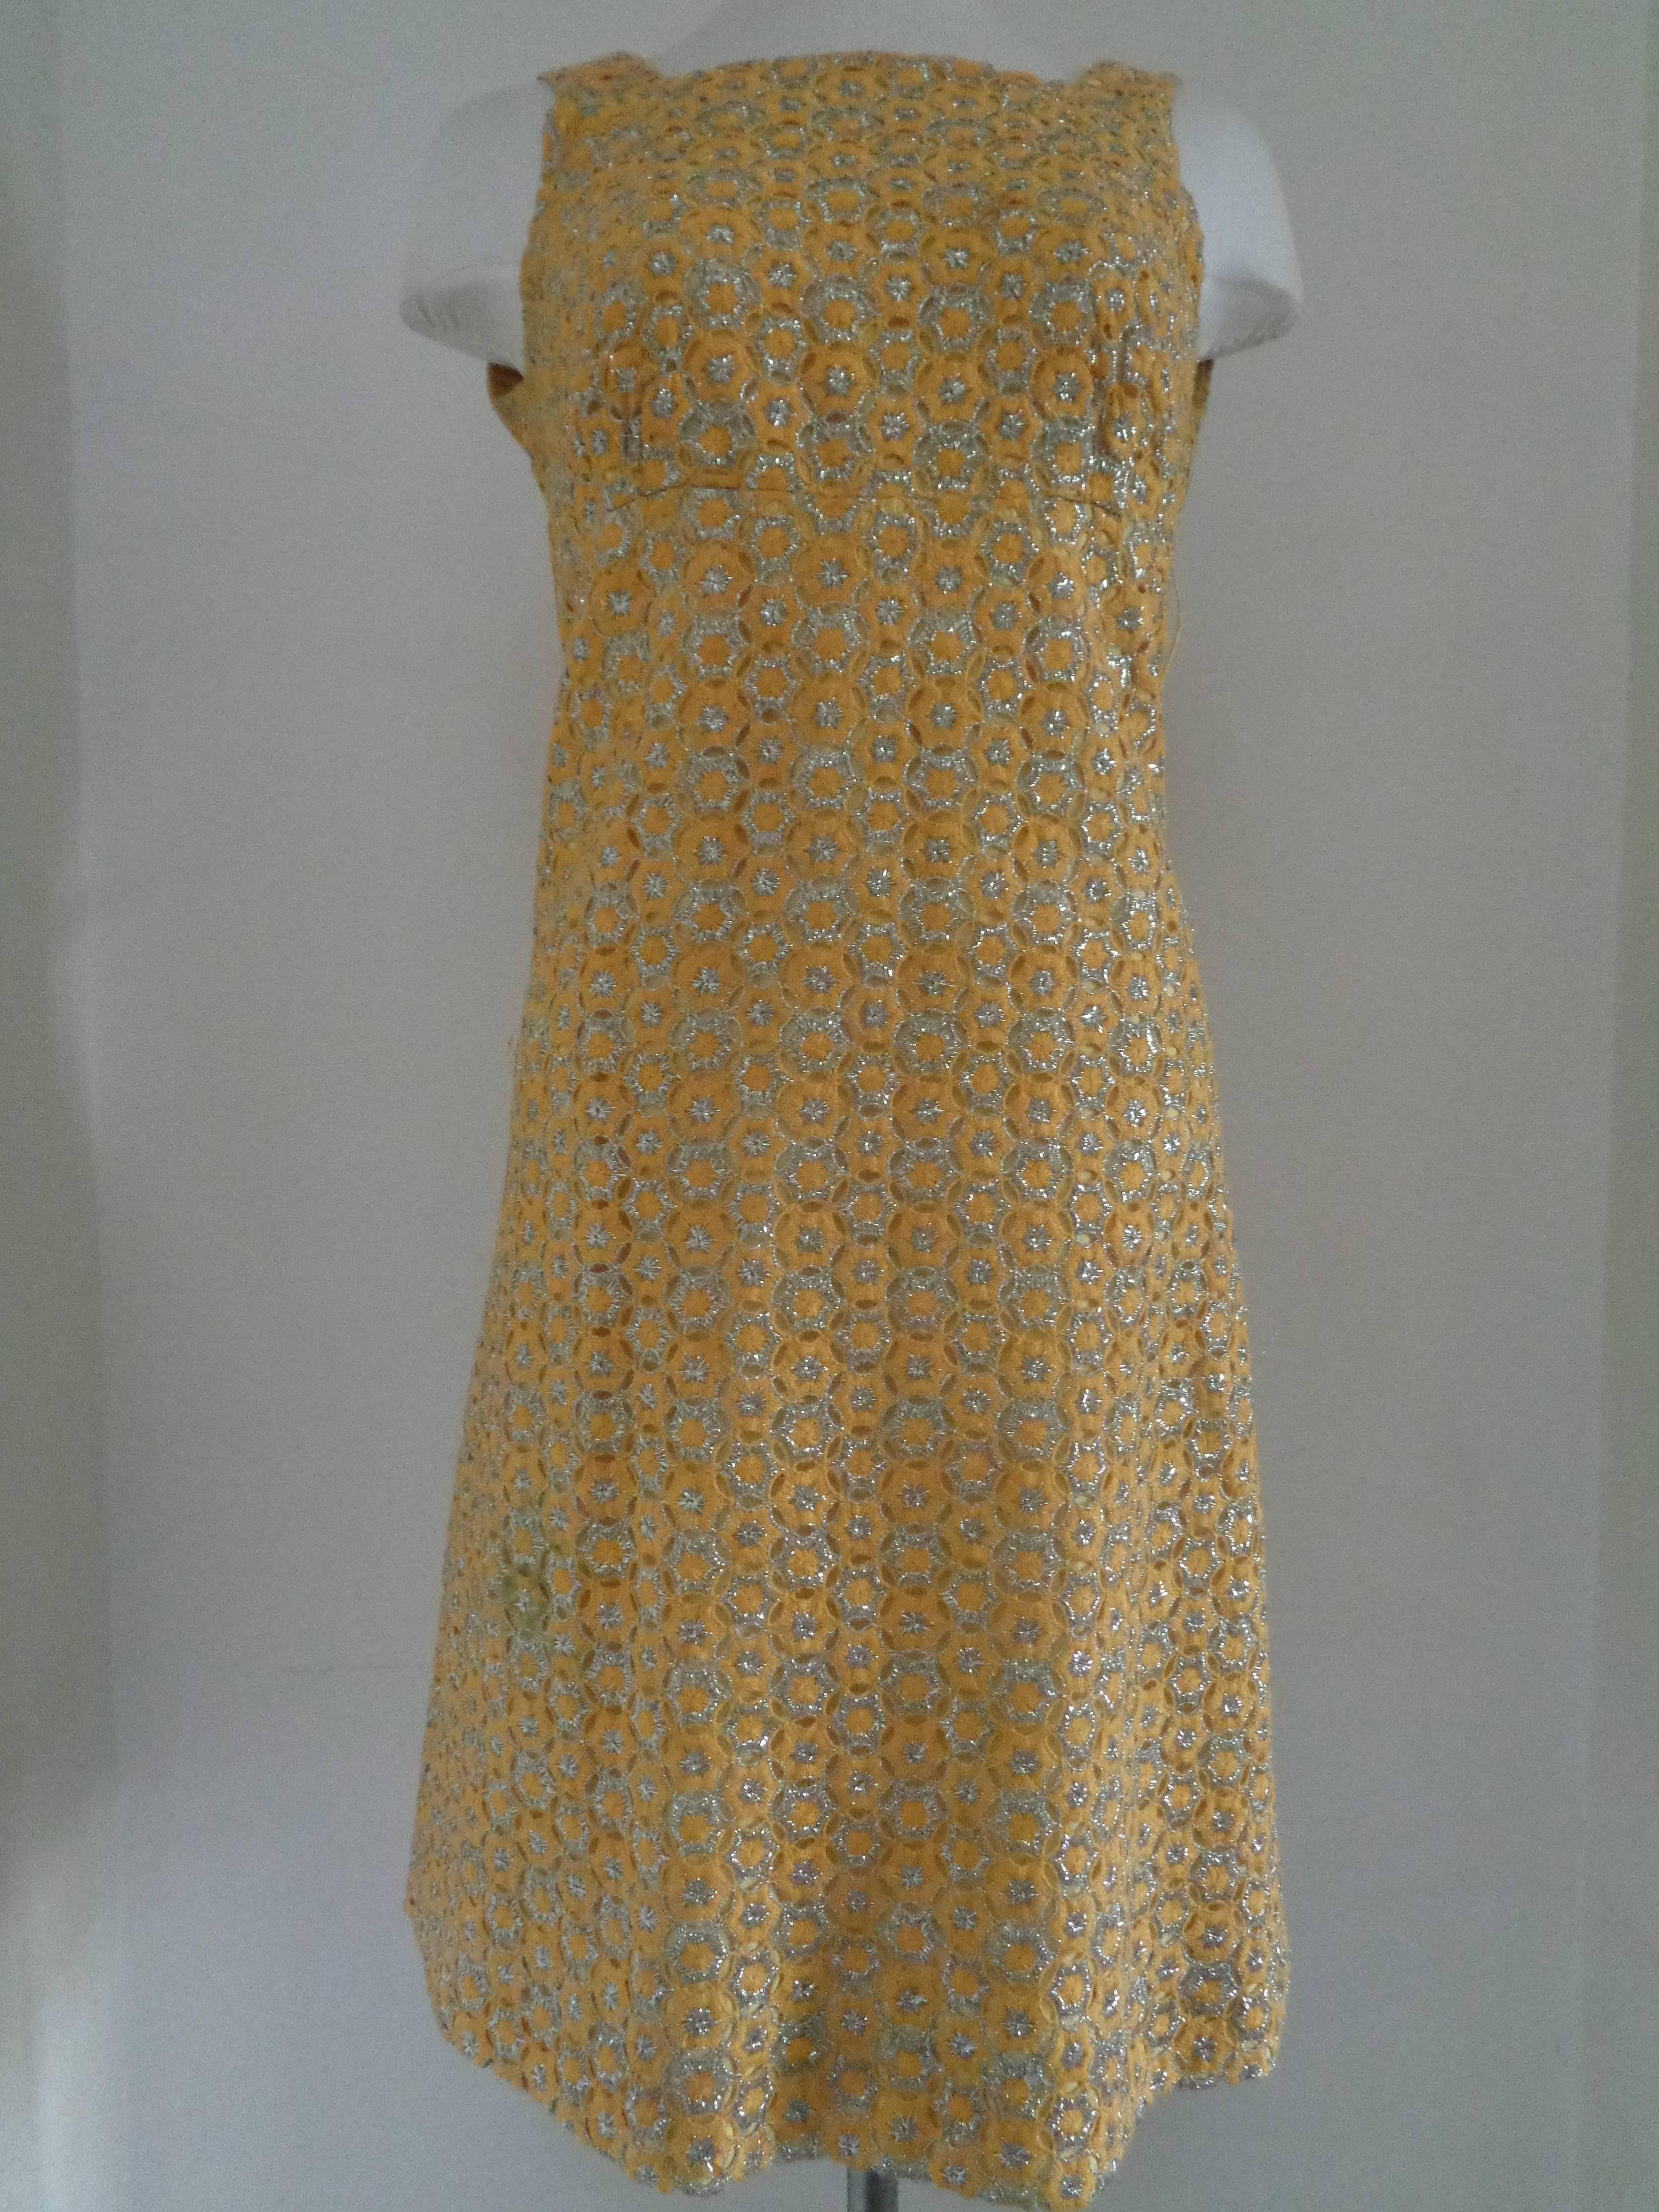 Carlo Caverni Yellow Silver Dress

Totally made in italy in italian size range 44

